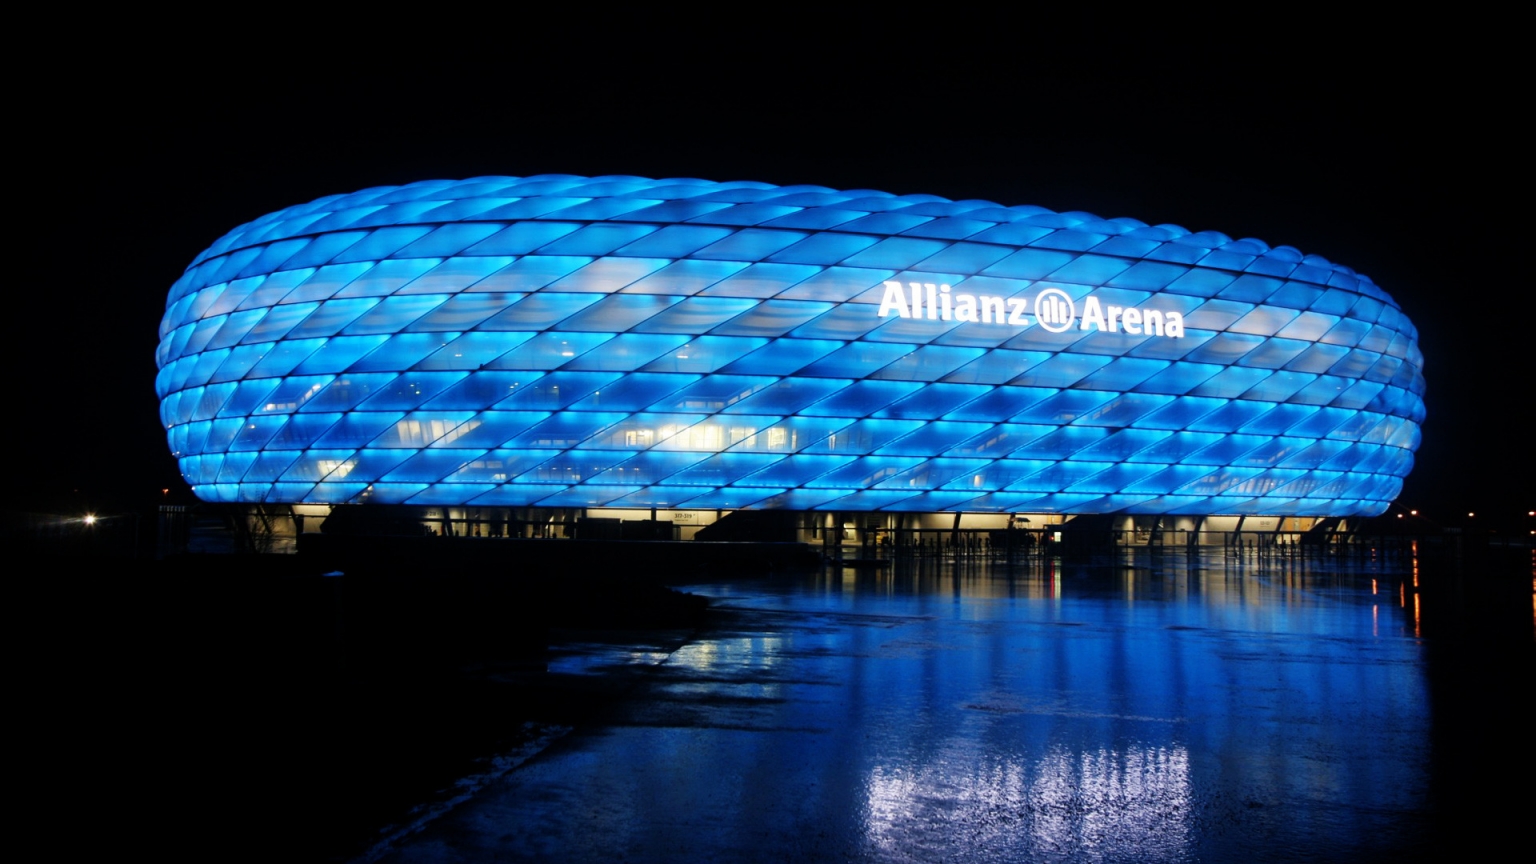 The Allianz Arena Munich for 1536 x 864 HDTV resolution